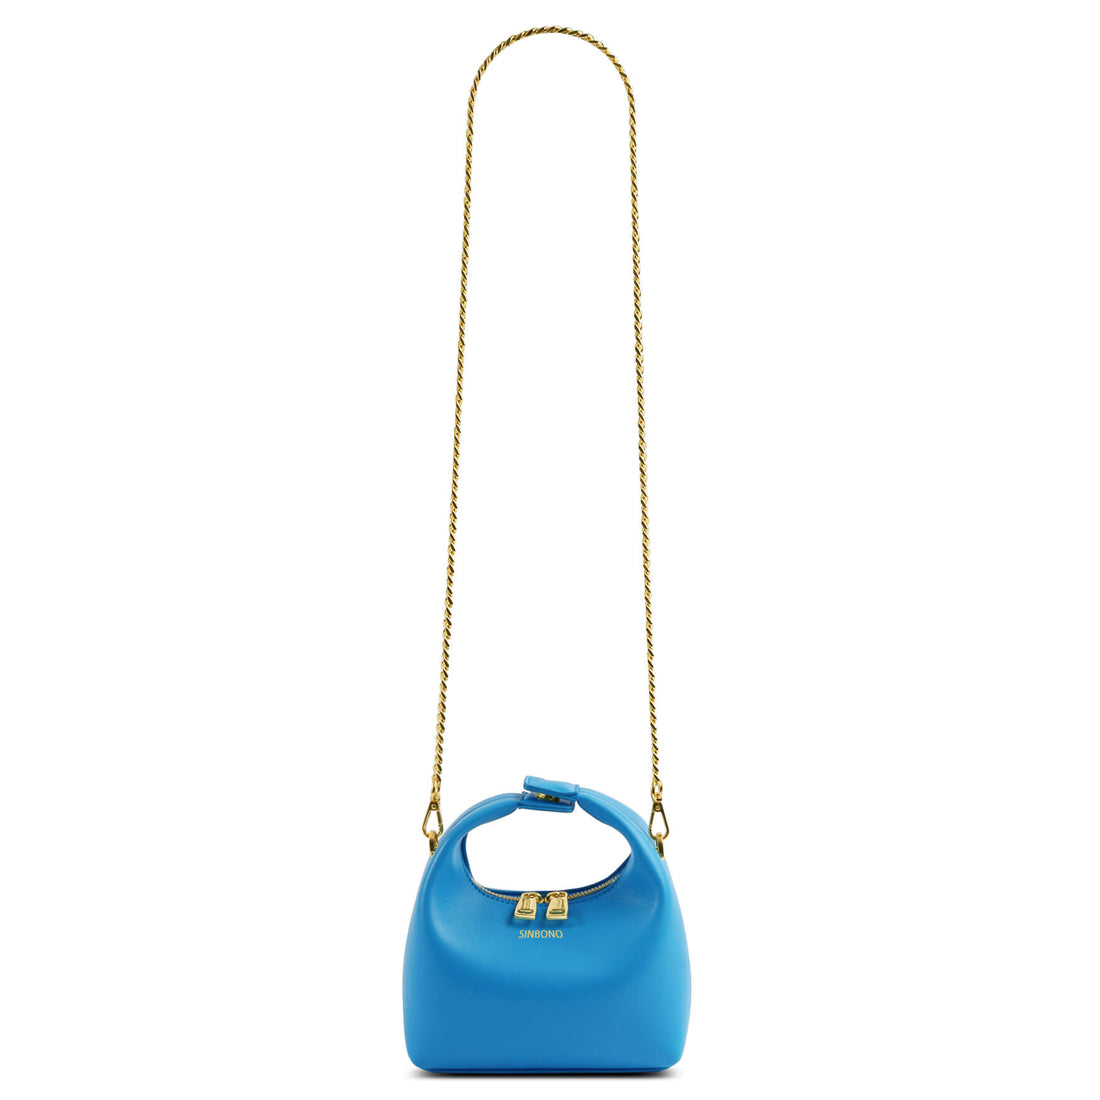 SINBONO Lake Blue Vienna Top Handle Handbag for Woman